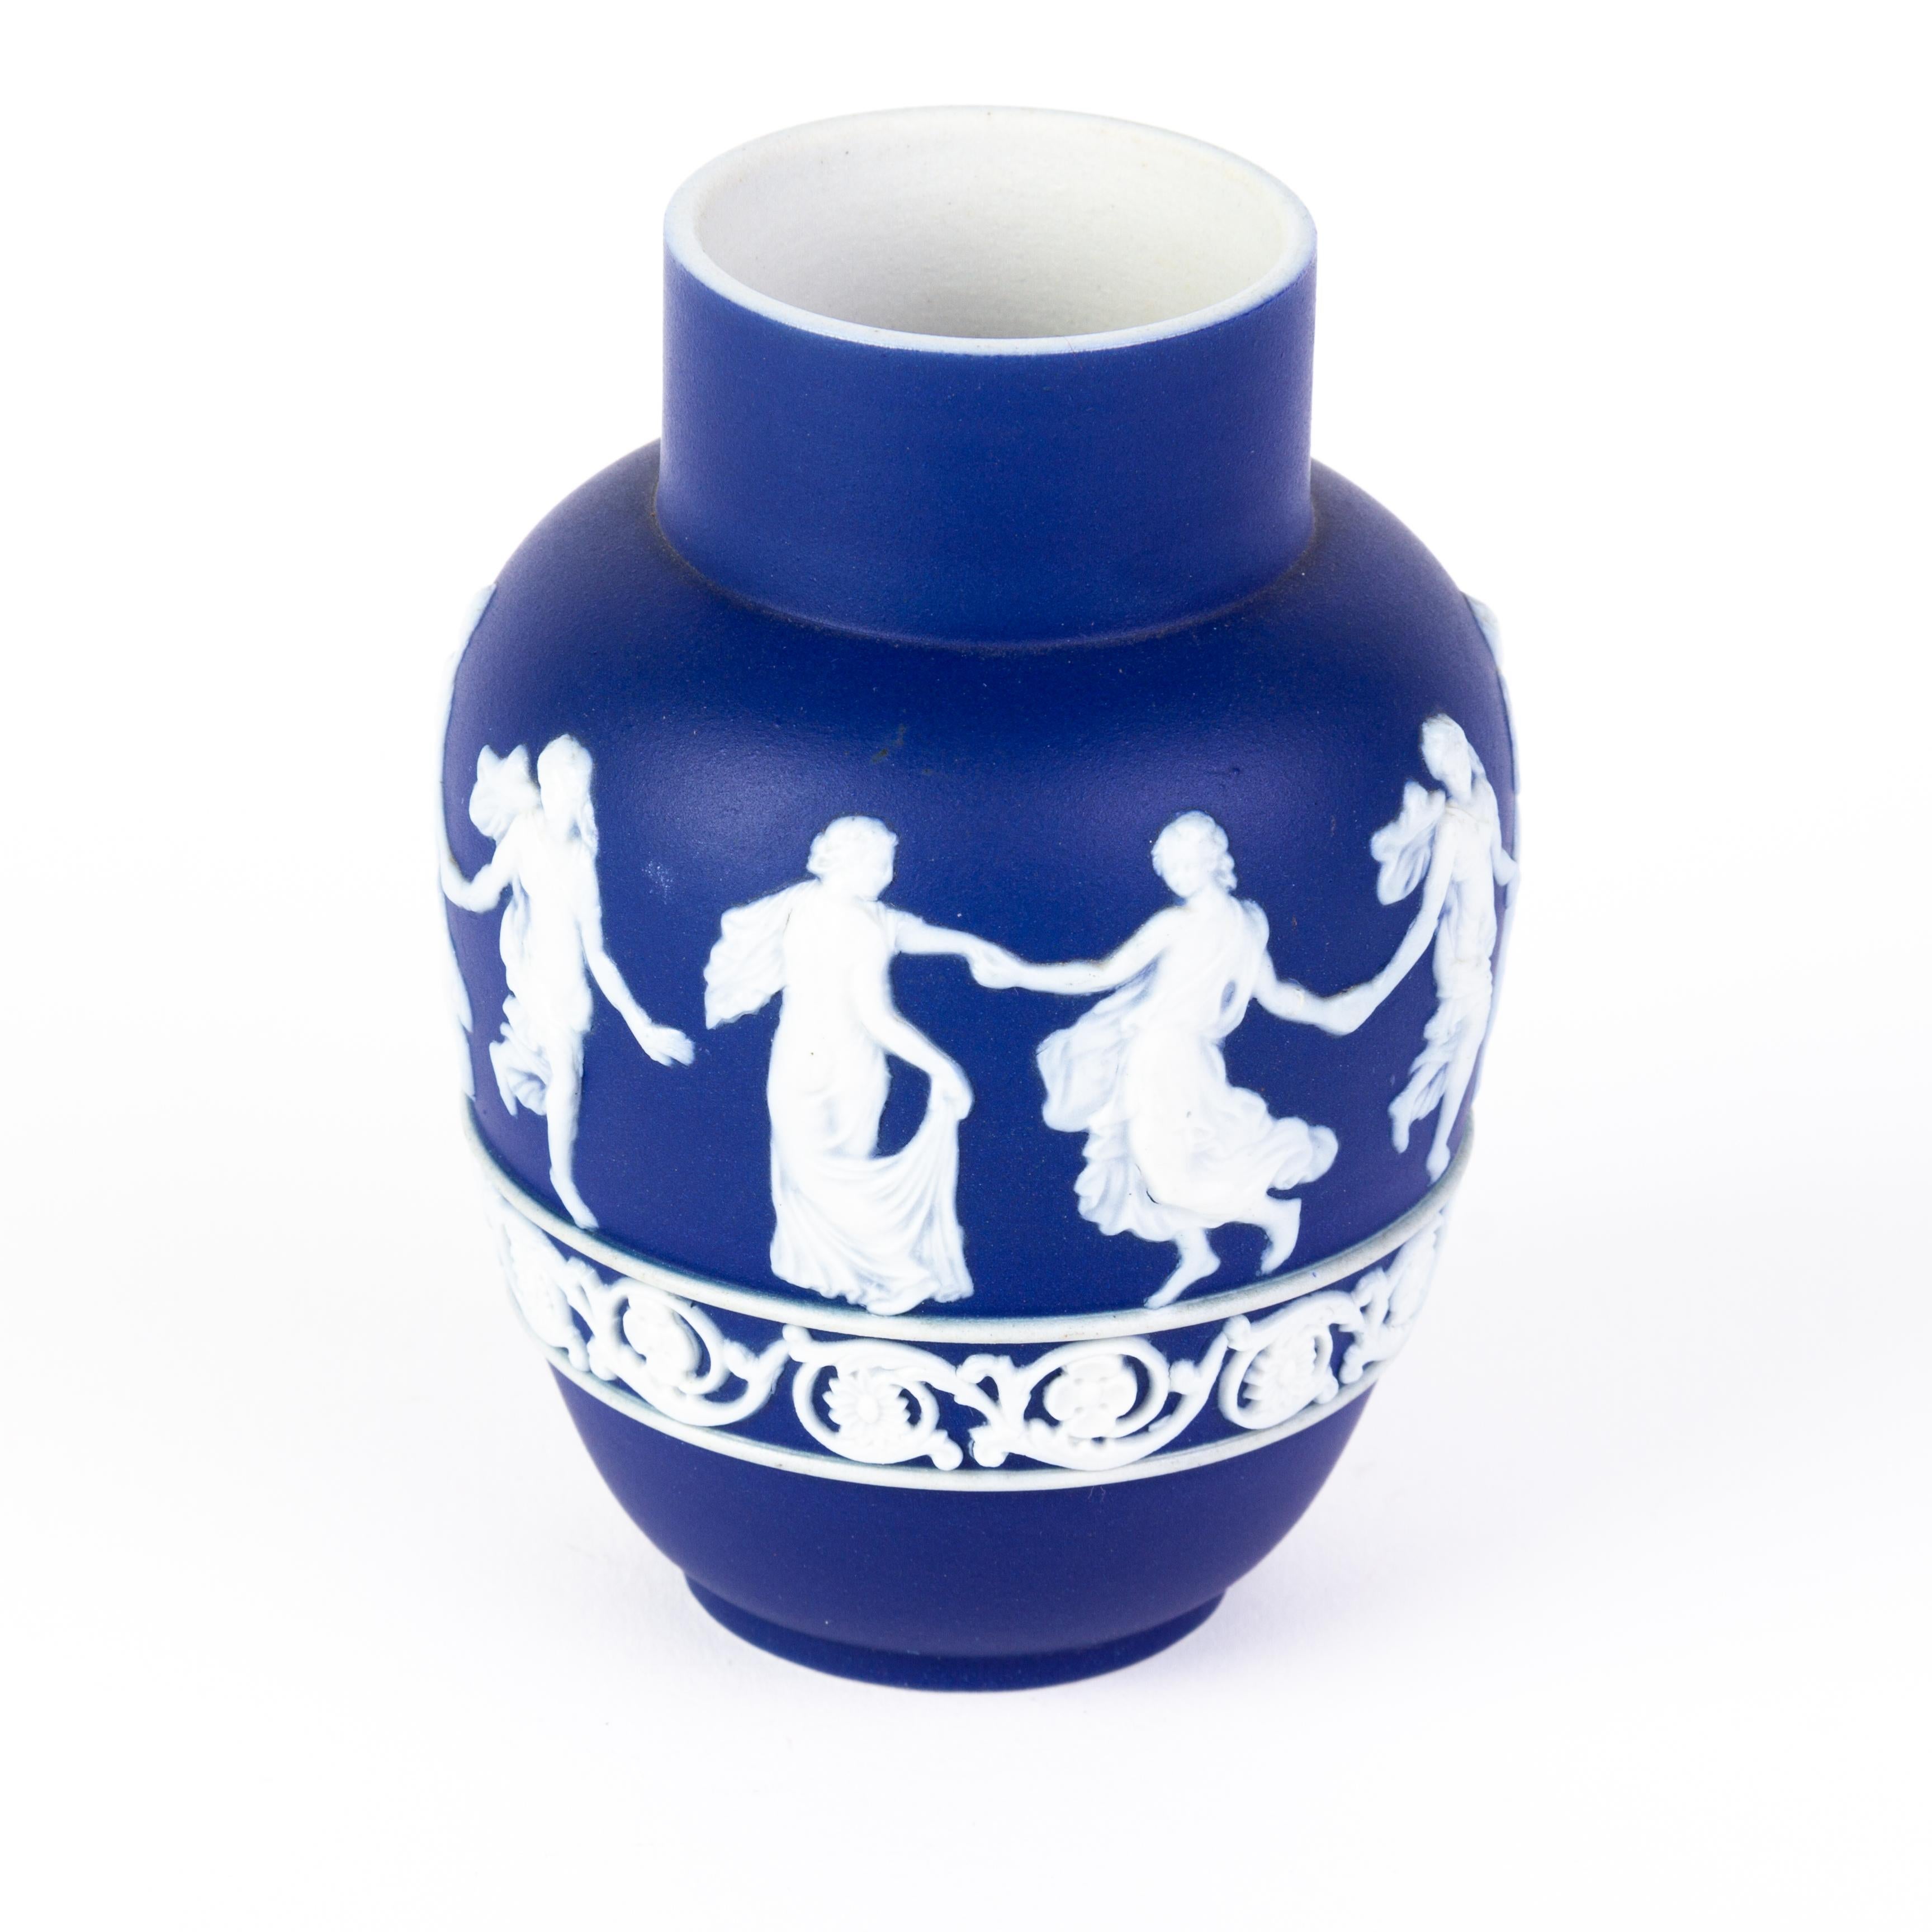 Victorian Wedgwood Portland Blue Jasperware Dancing Hours Baluster Vase
Good condition
Free international shipping.